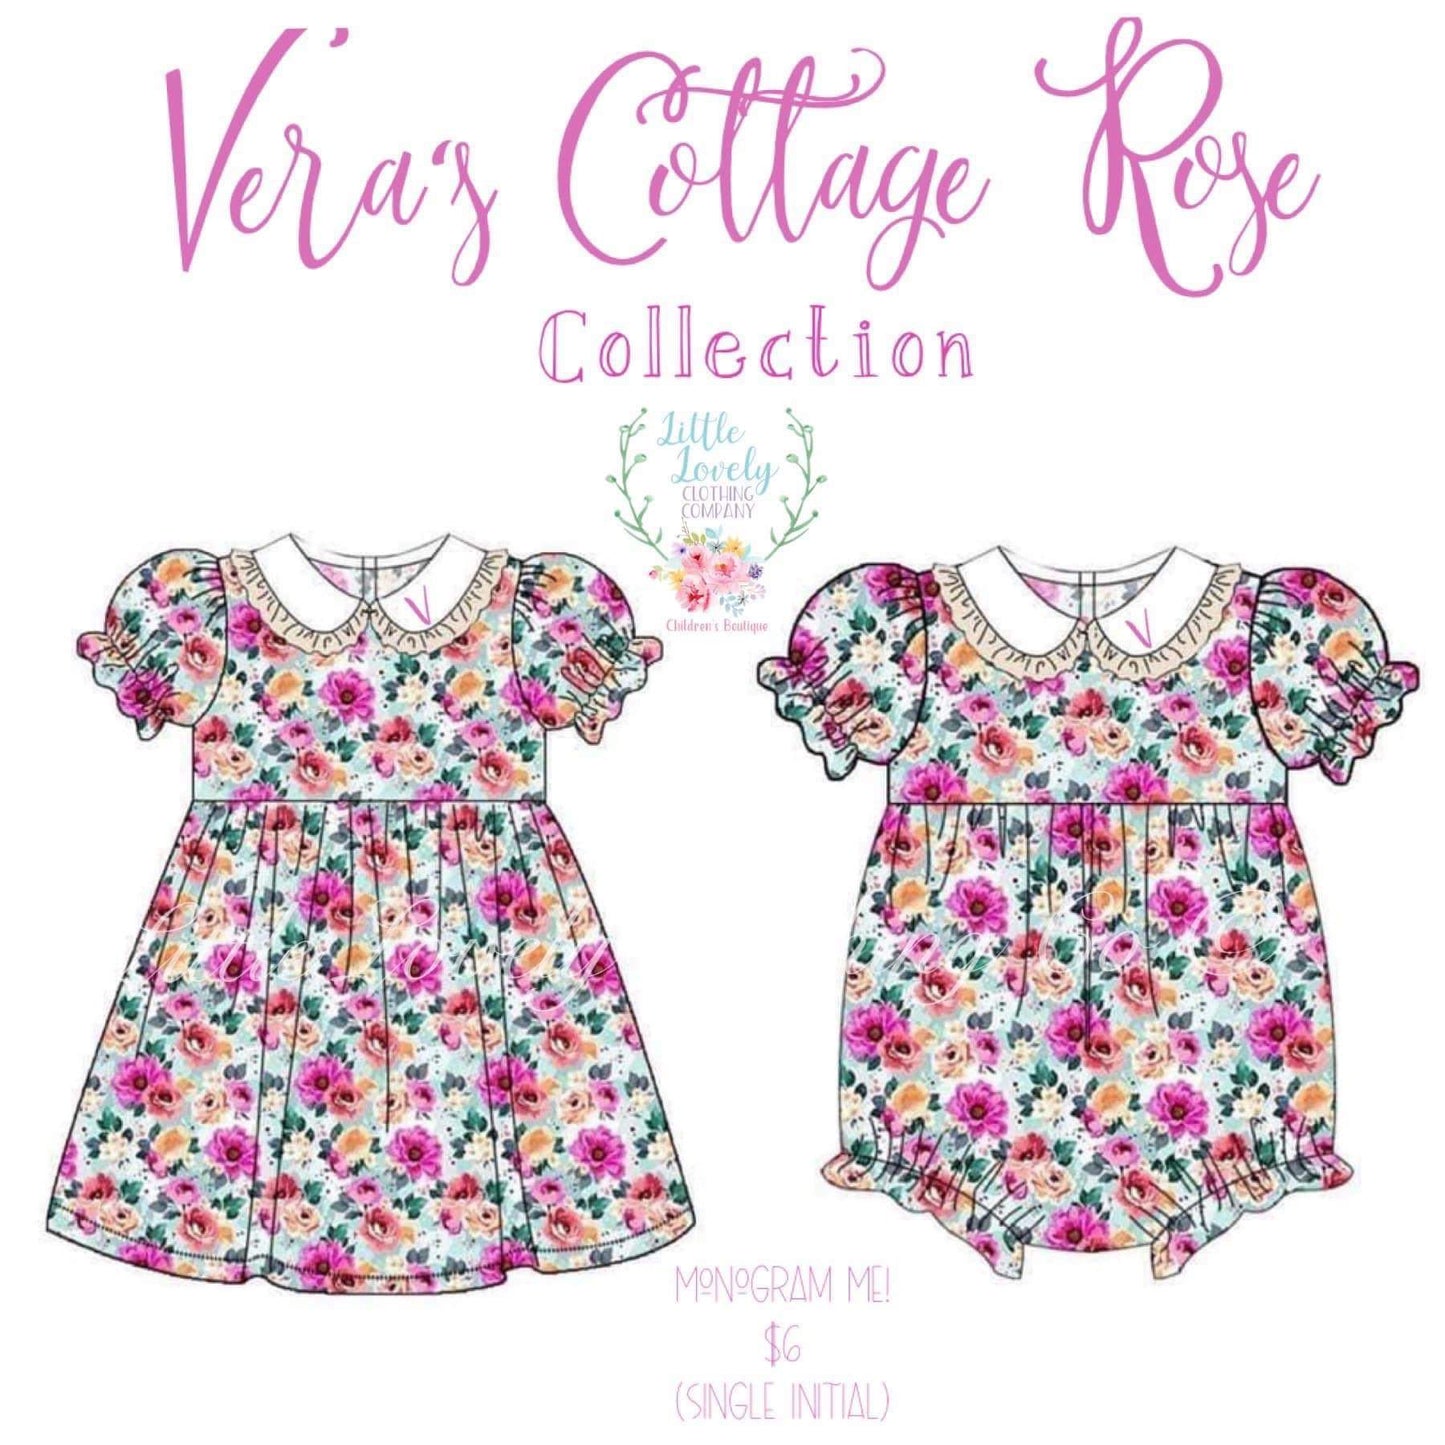 Vera’s Cottage Rose ETA to LLCCO - May